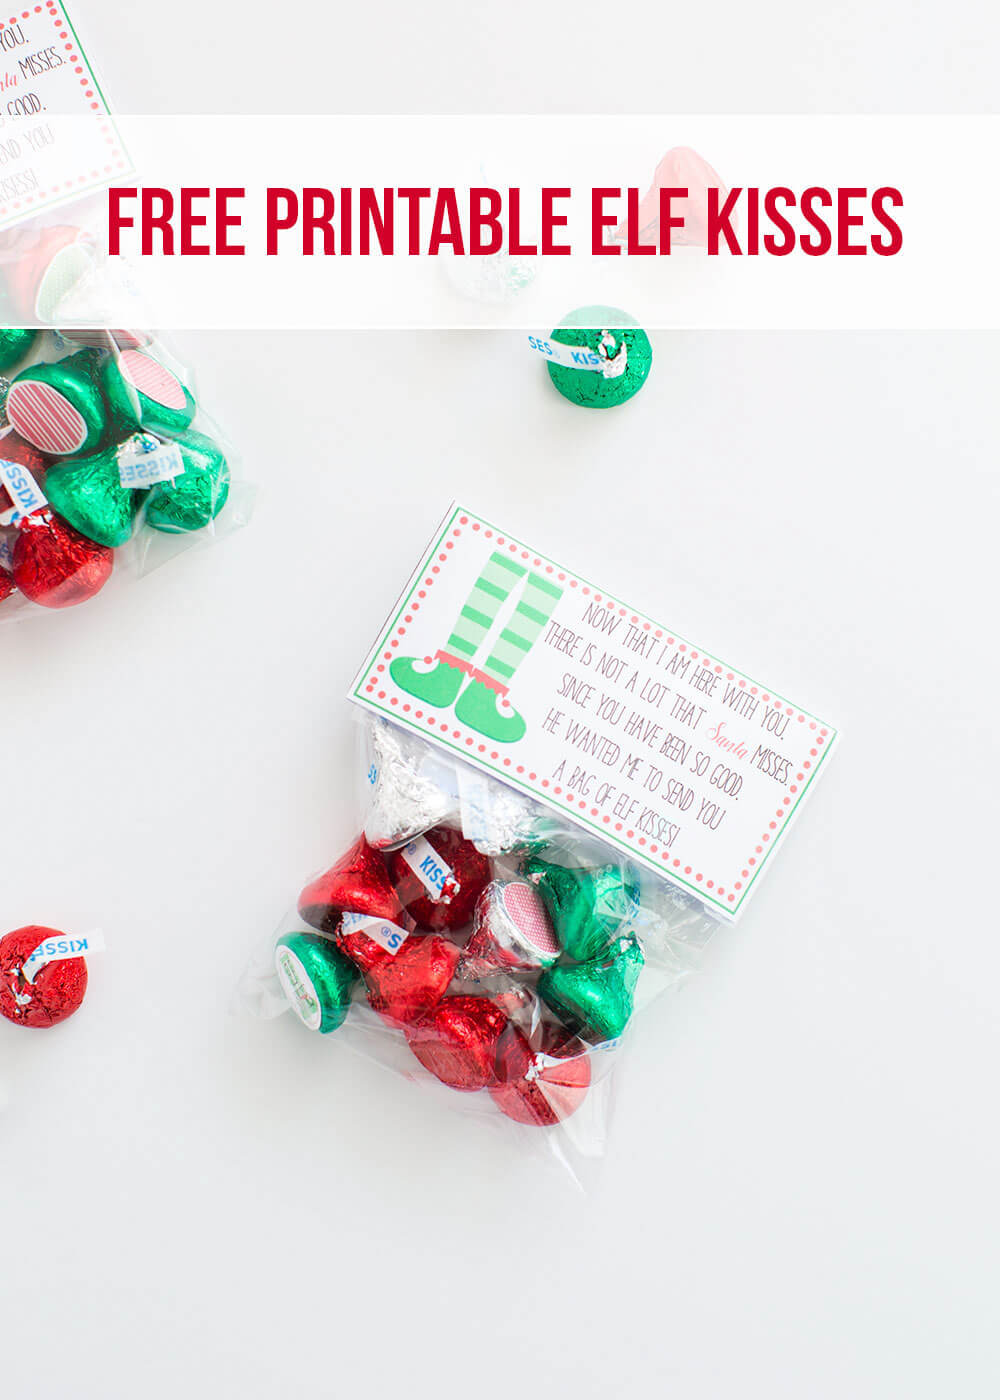 Elf Kisses Free Printable The Inspiration Board